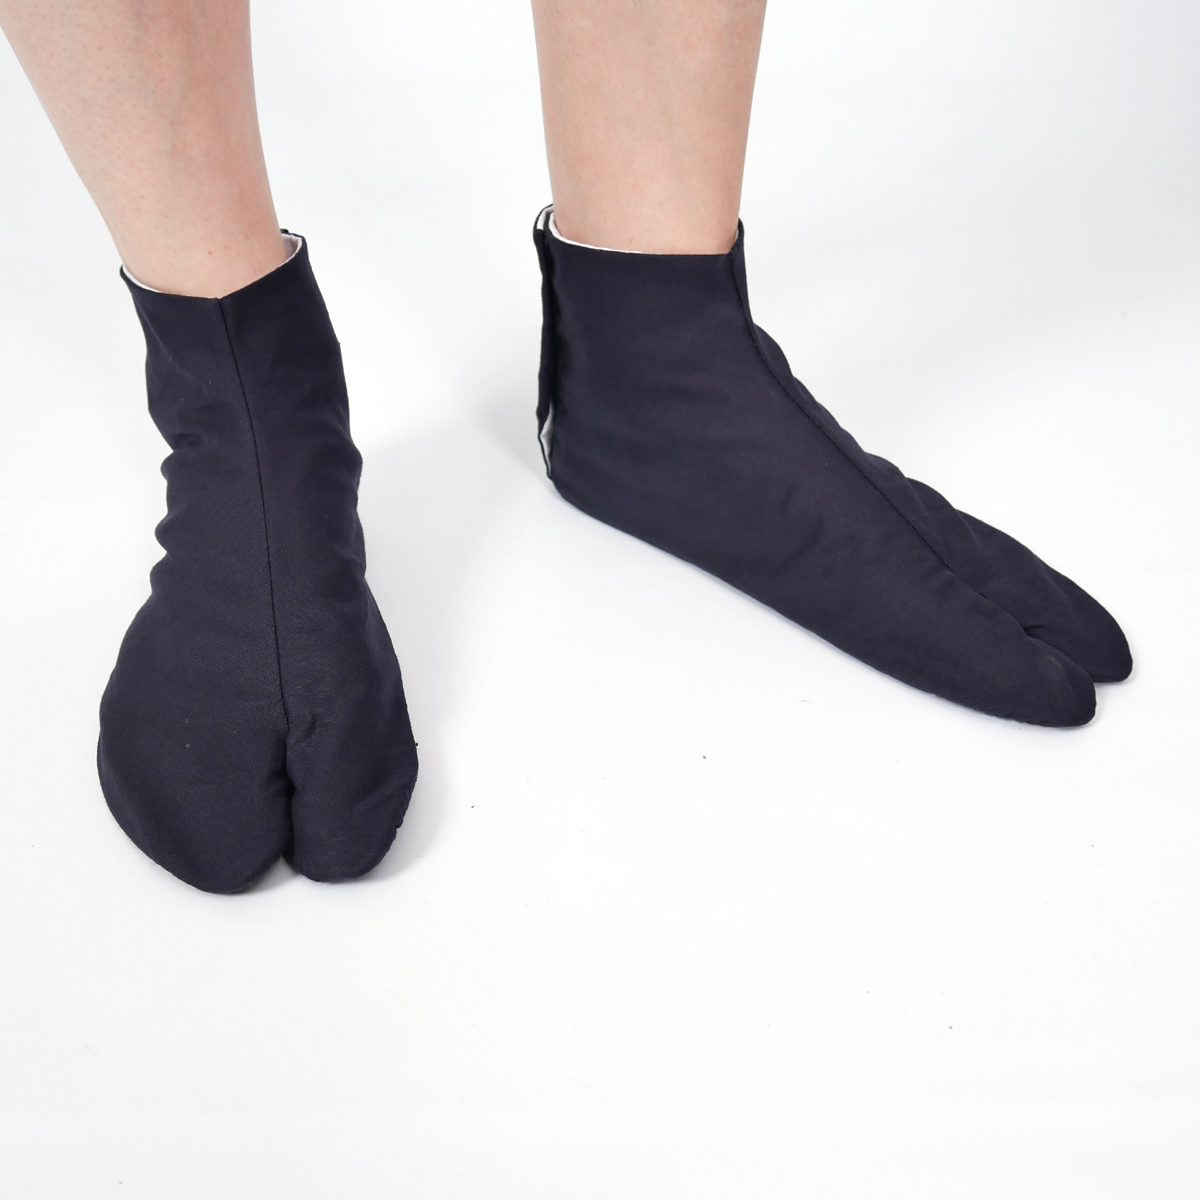 Chaussettes Tabi Japonaises Noir /Tabi Japanese Socks Black 28-30 cm